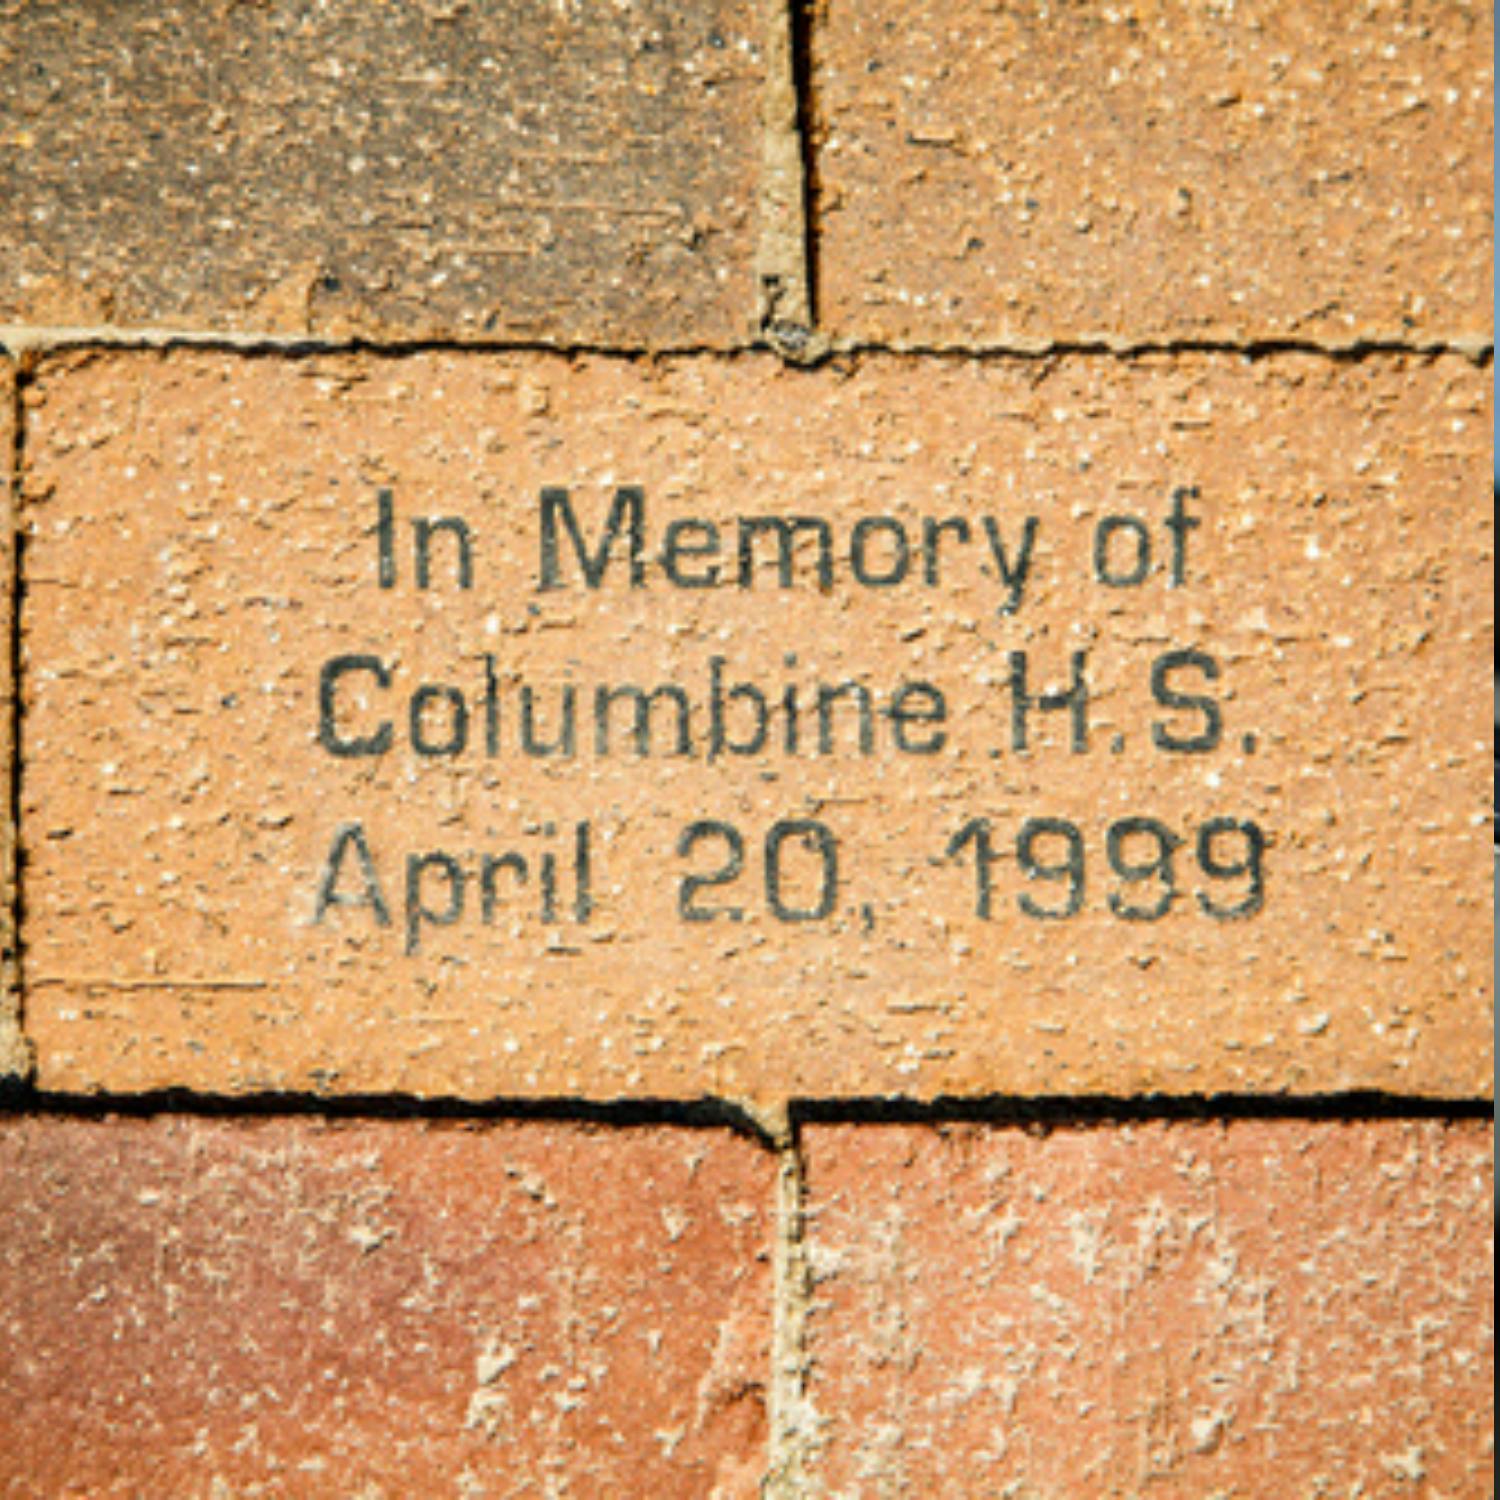 25 years on from Columbine massacre